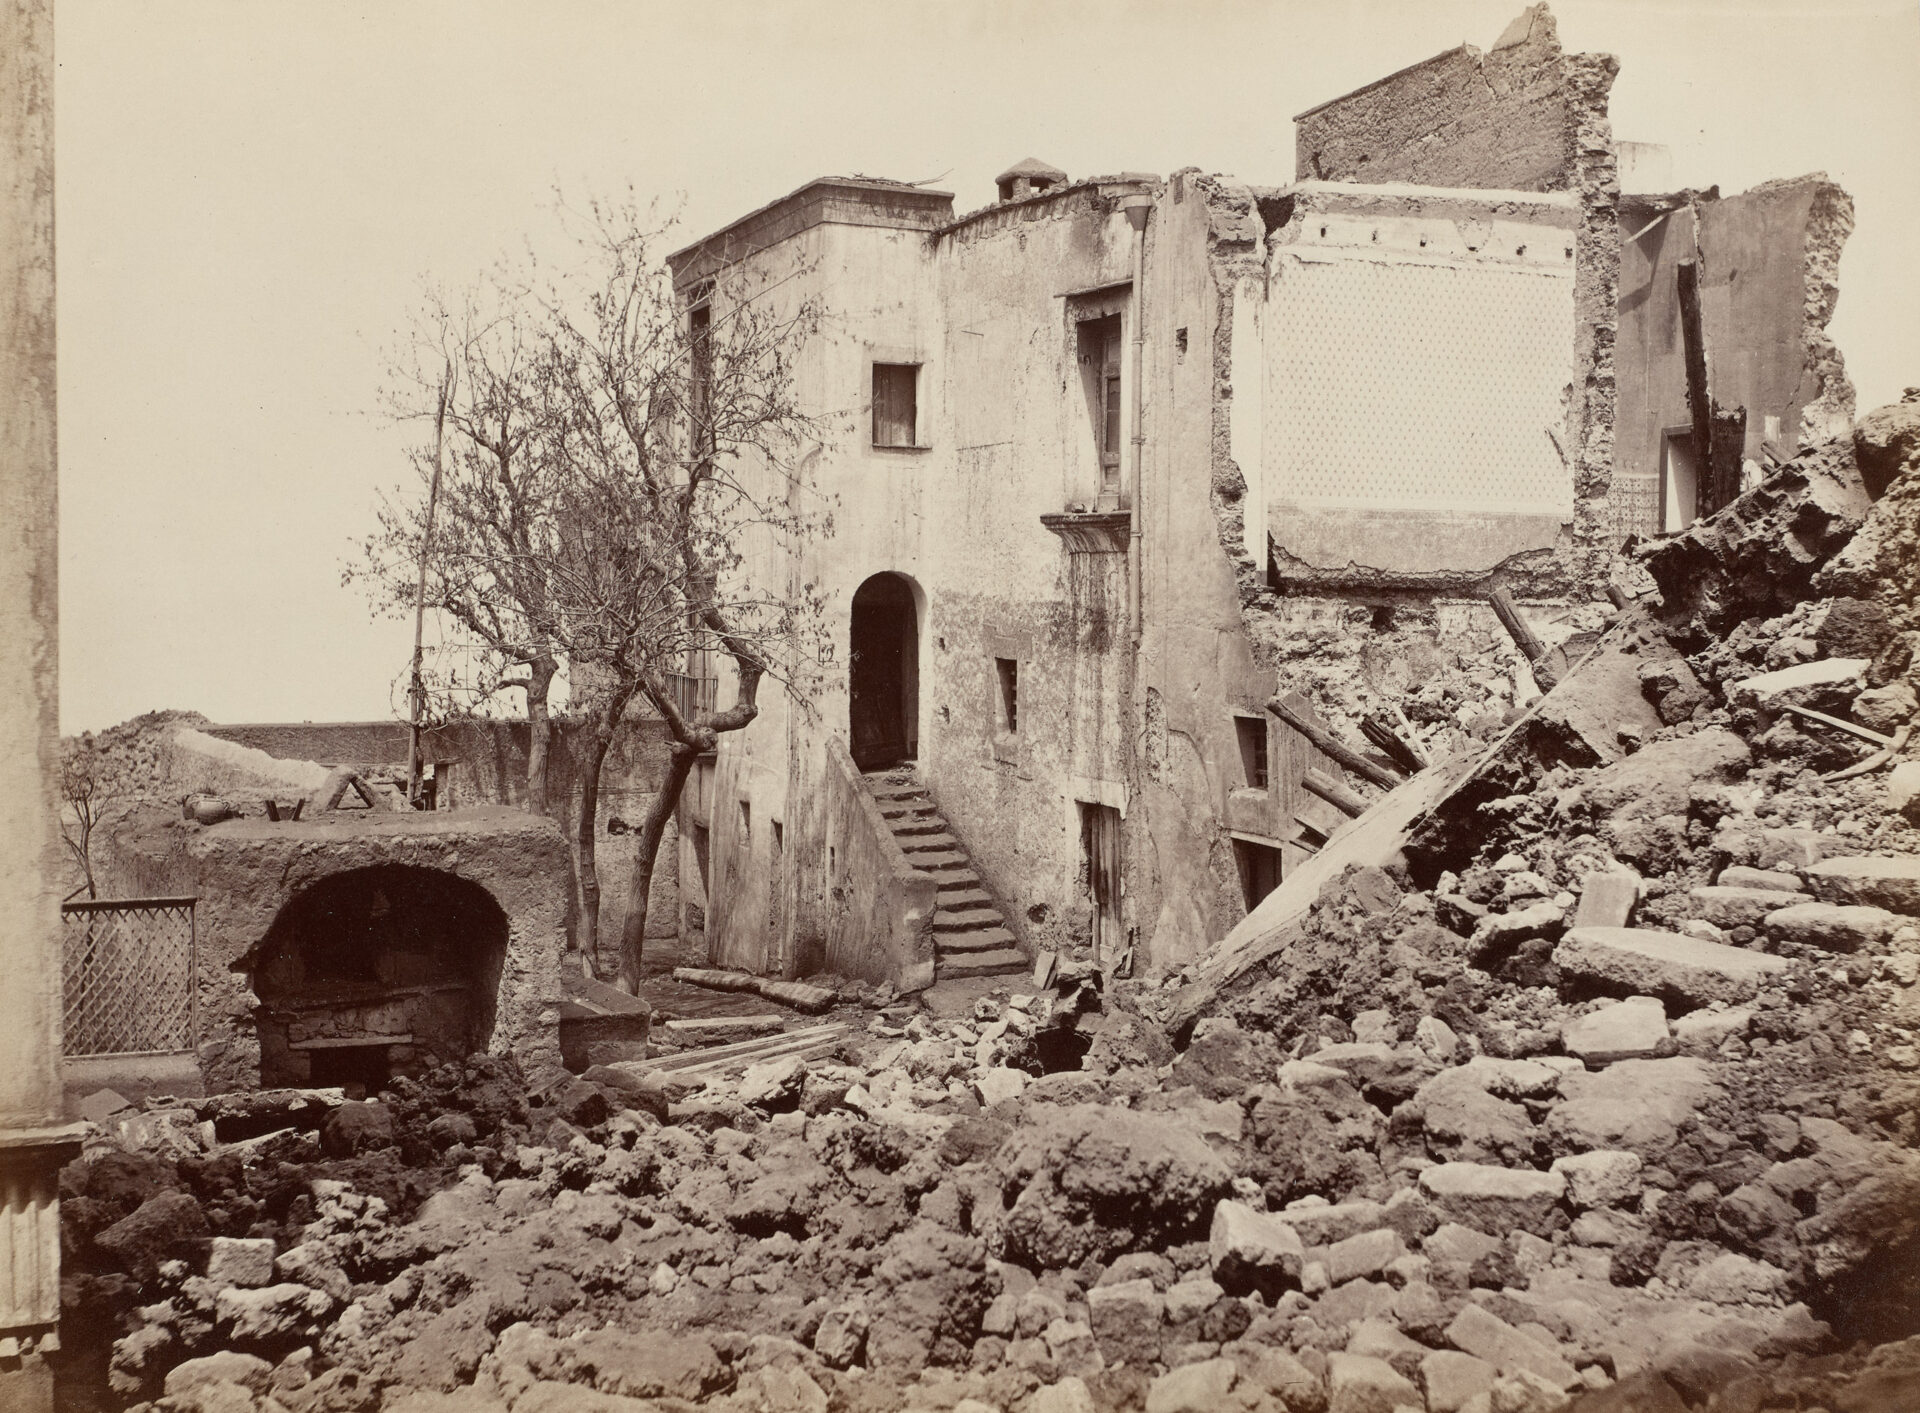 Giorgio Sommer, Neapel, Ruinen in San Sebastiano al Vesuvio, 1872-73, Albuminpapier auf Karton, Städel Museum, Frankfurt am Main, Public Domain